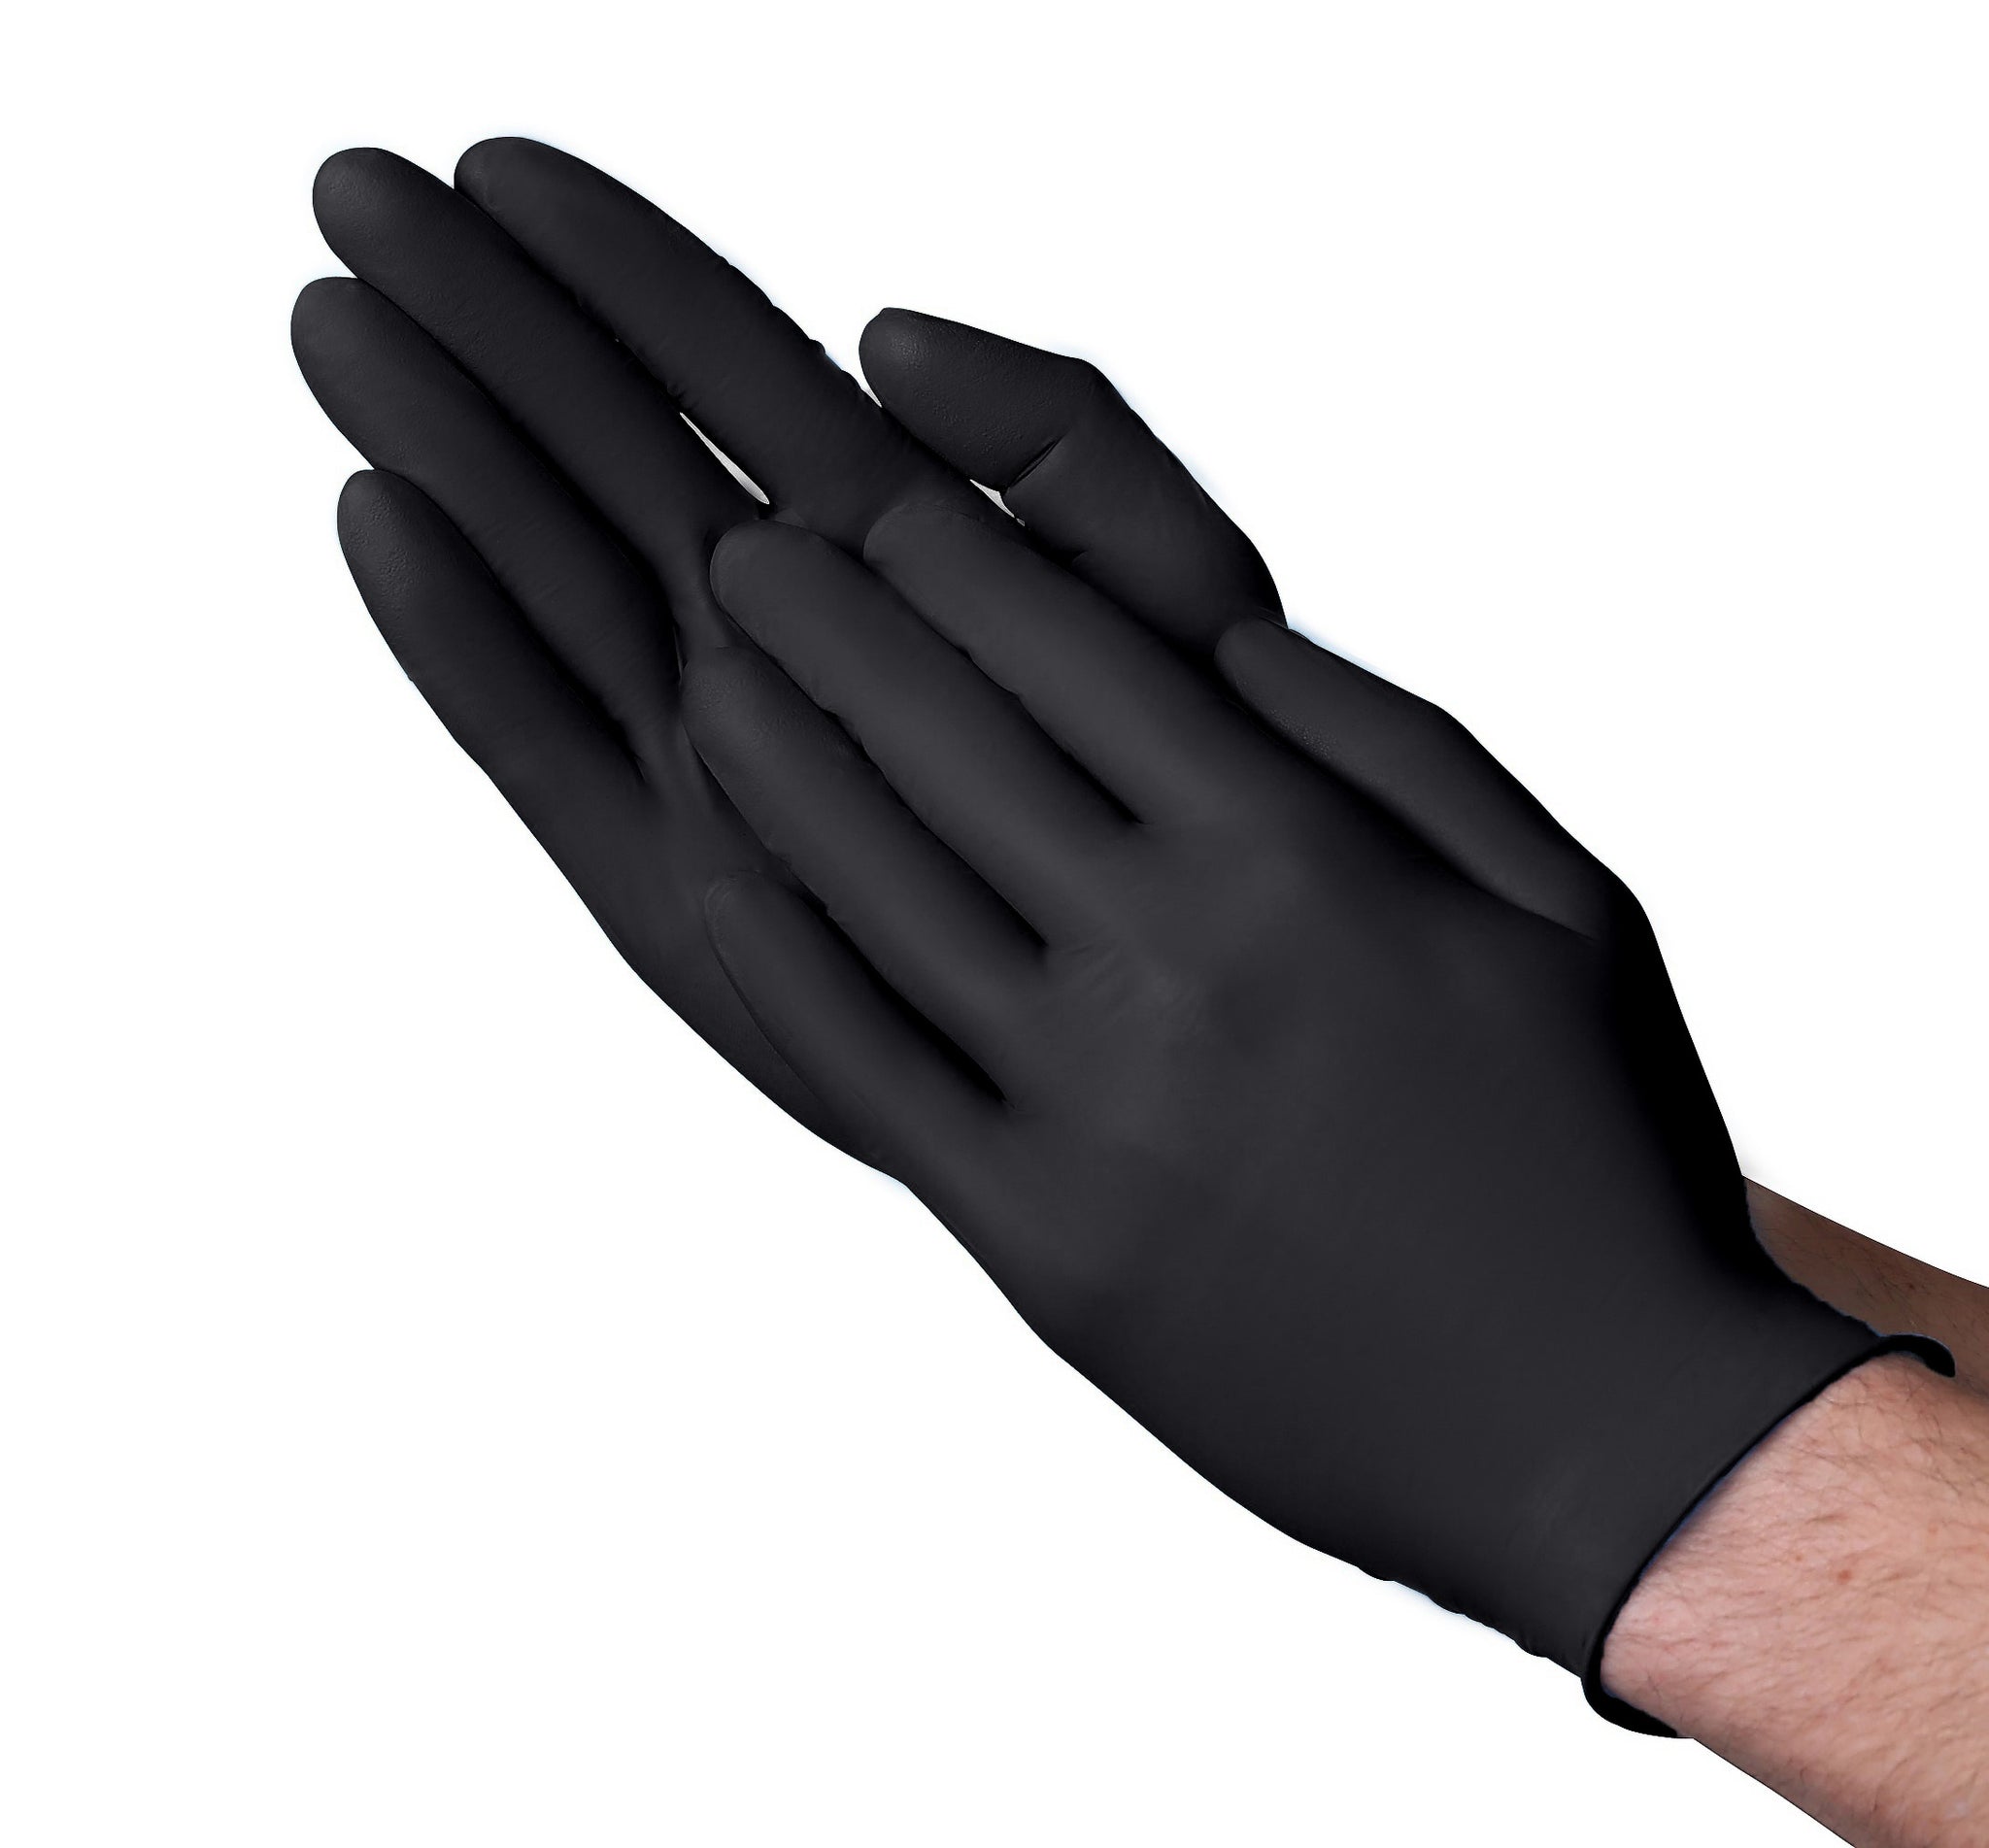 3277DK Super Grip Exam Grade Disposable Gloves with Diamond Grip Patte